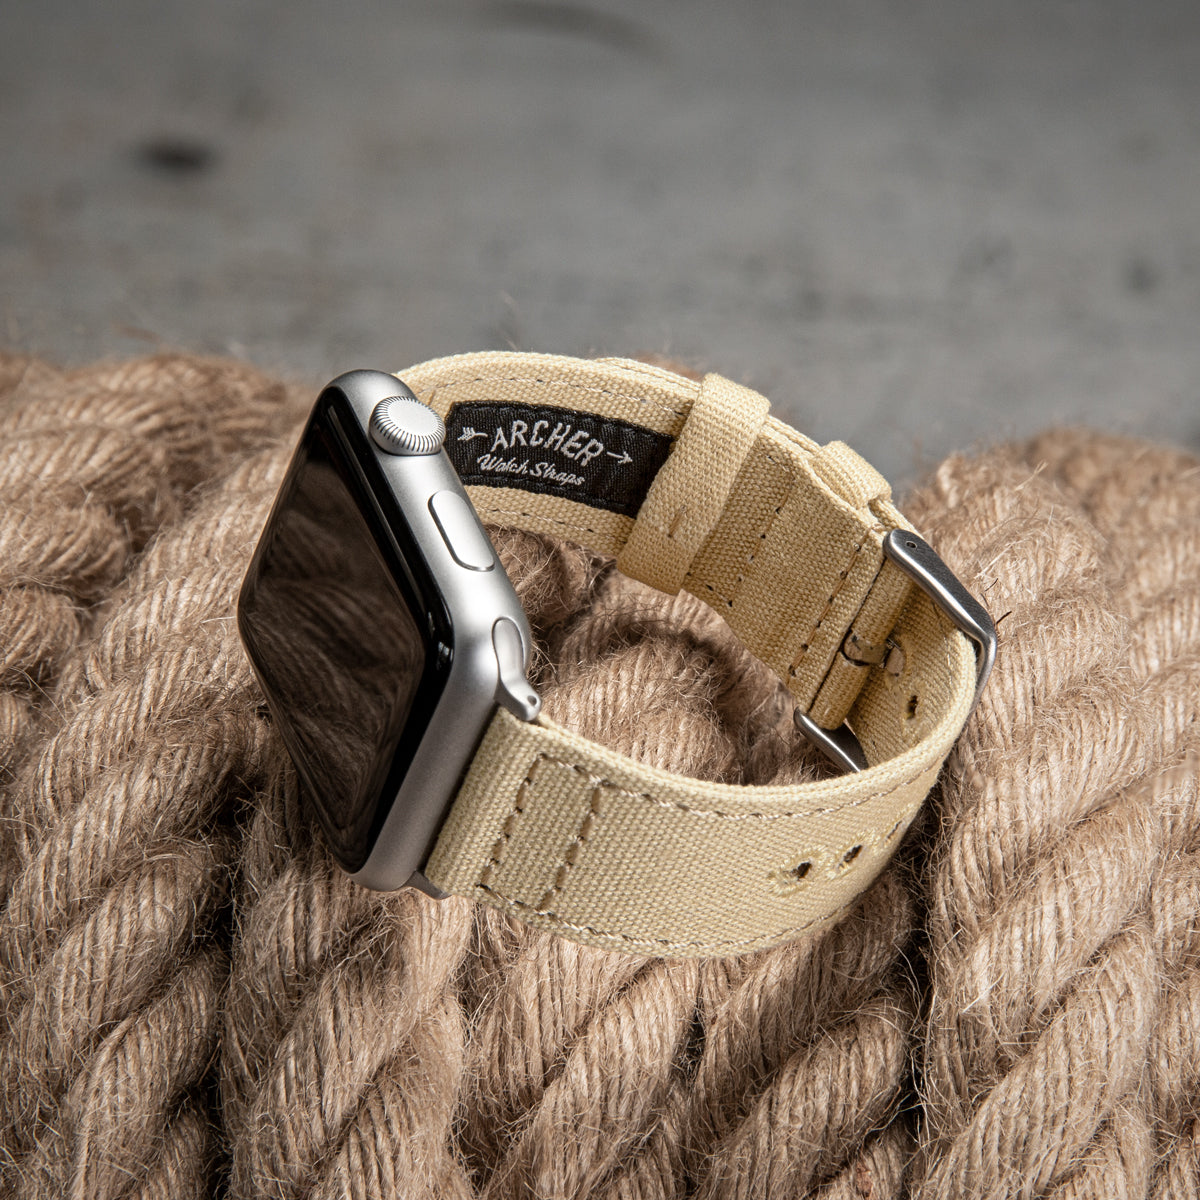 Archer Watch Straps - Canvas Watch Bands for Apple Watch (Carmine